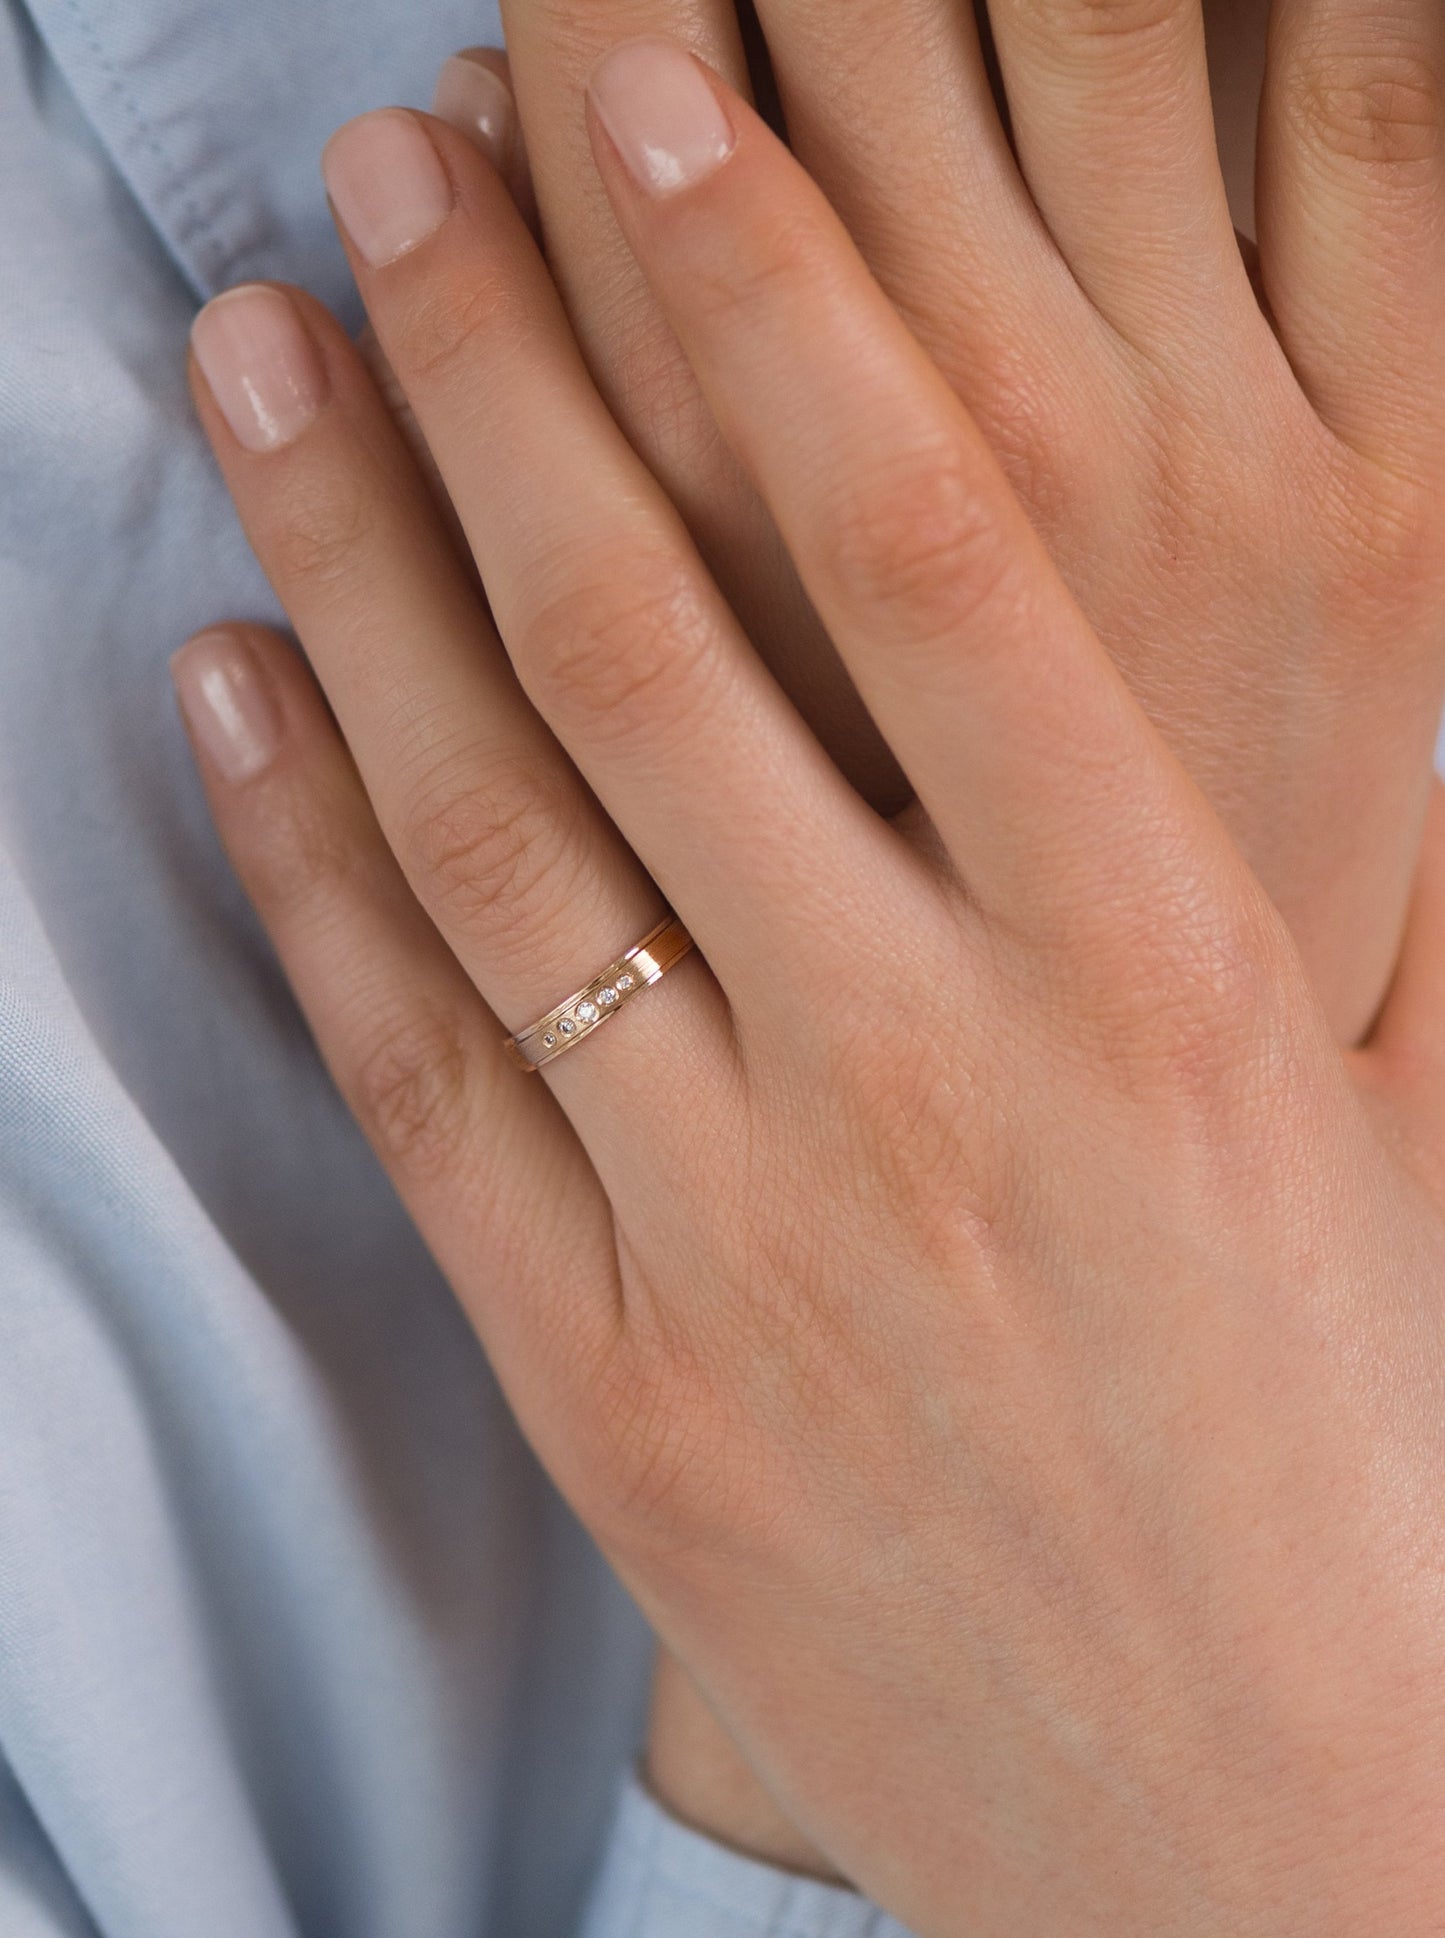 His and hers wedding rings set. Couple wedding rings. Solid gold wedding bands. Gold wedding rings set with diamonds.